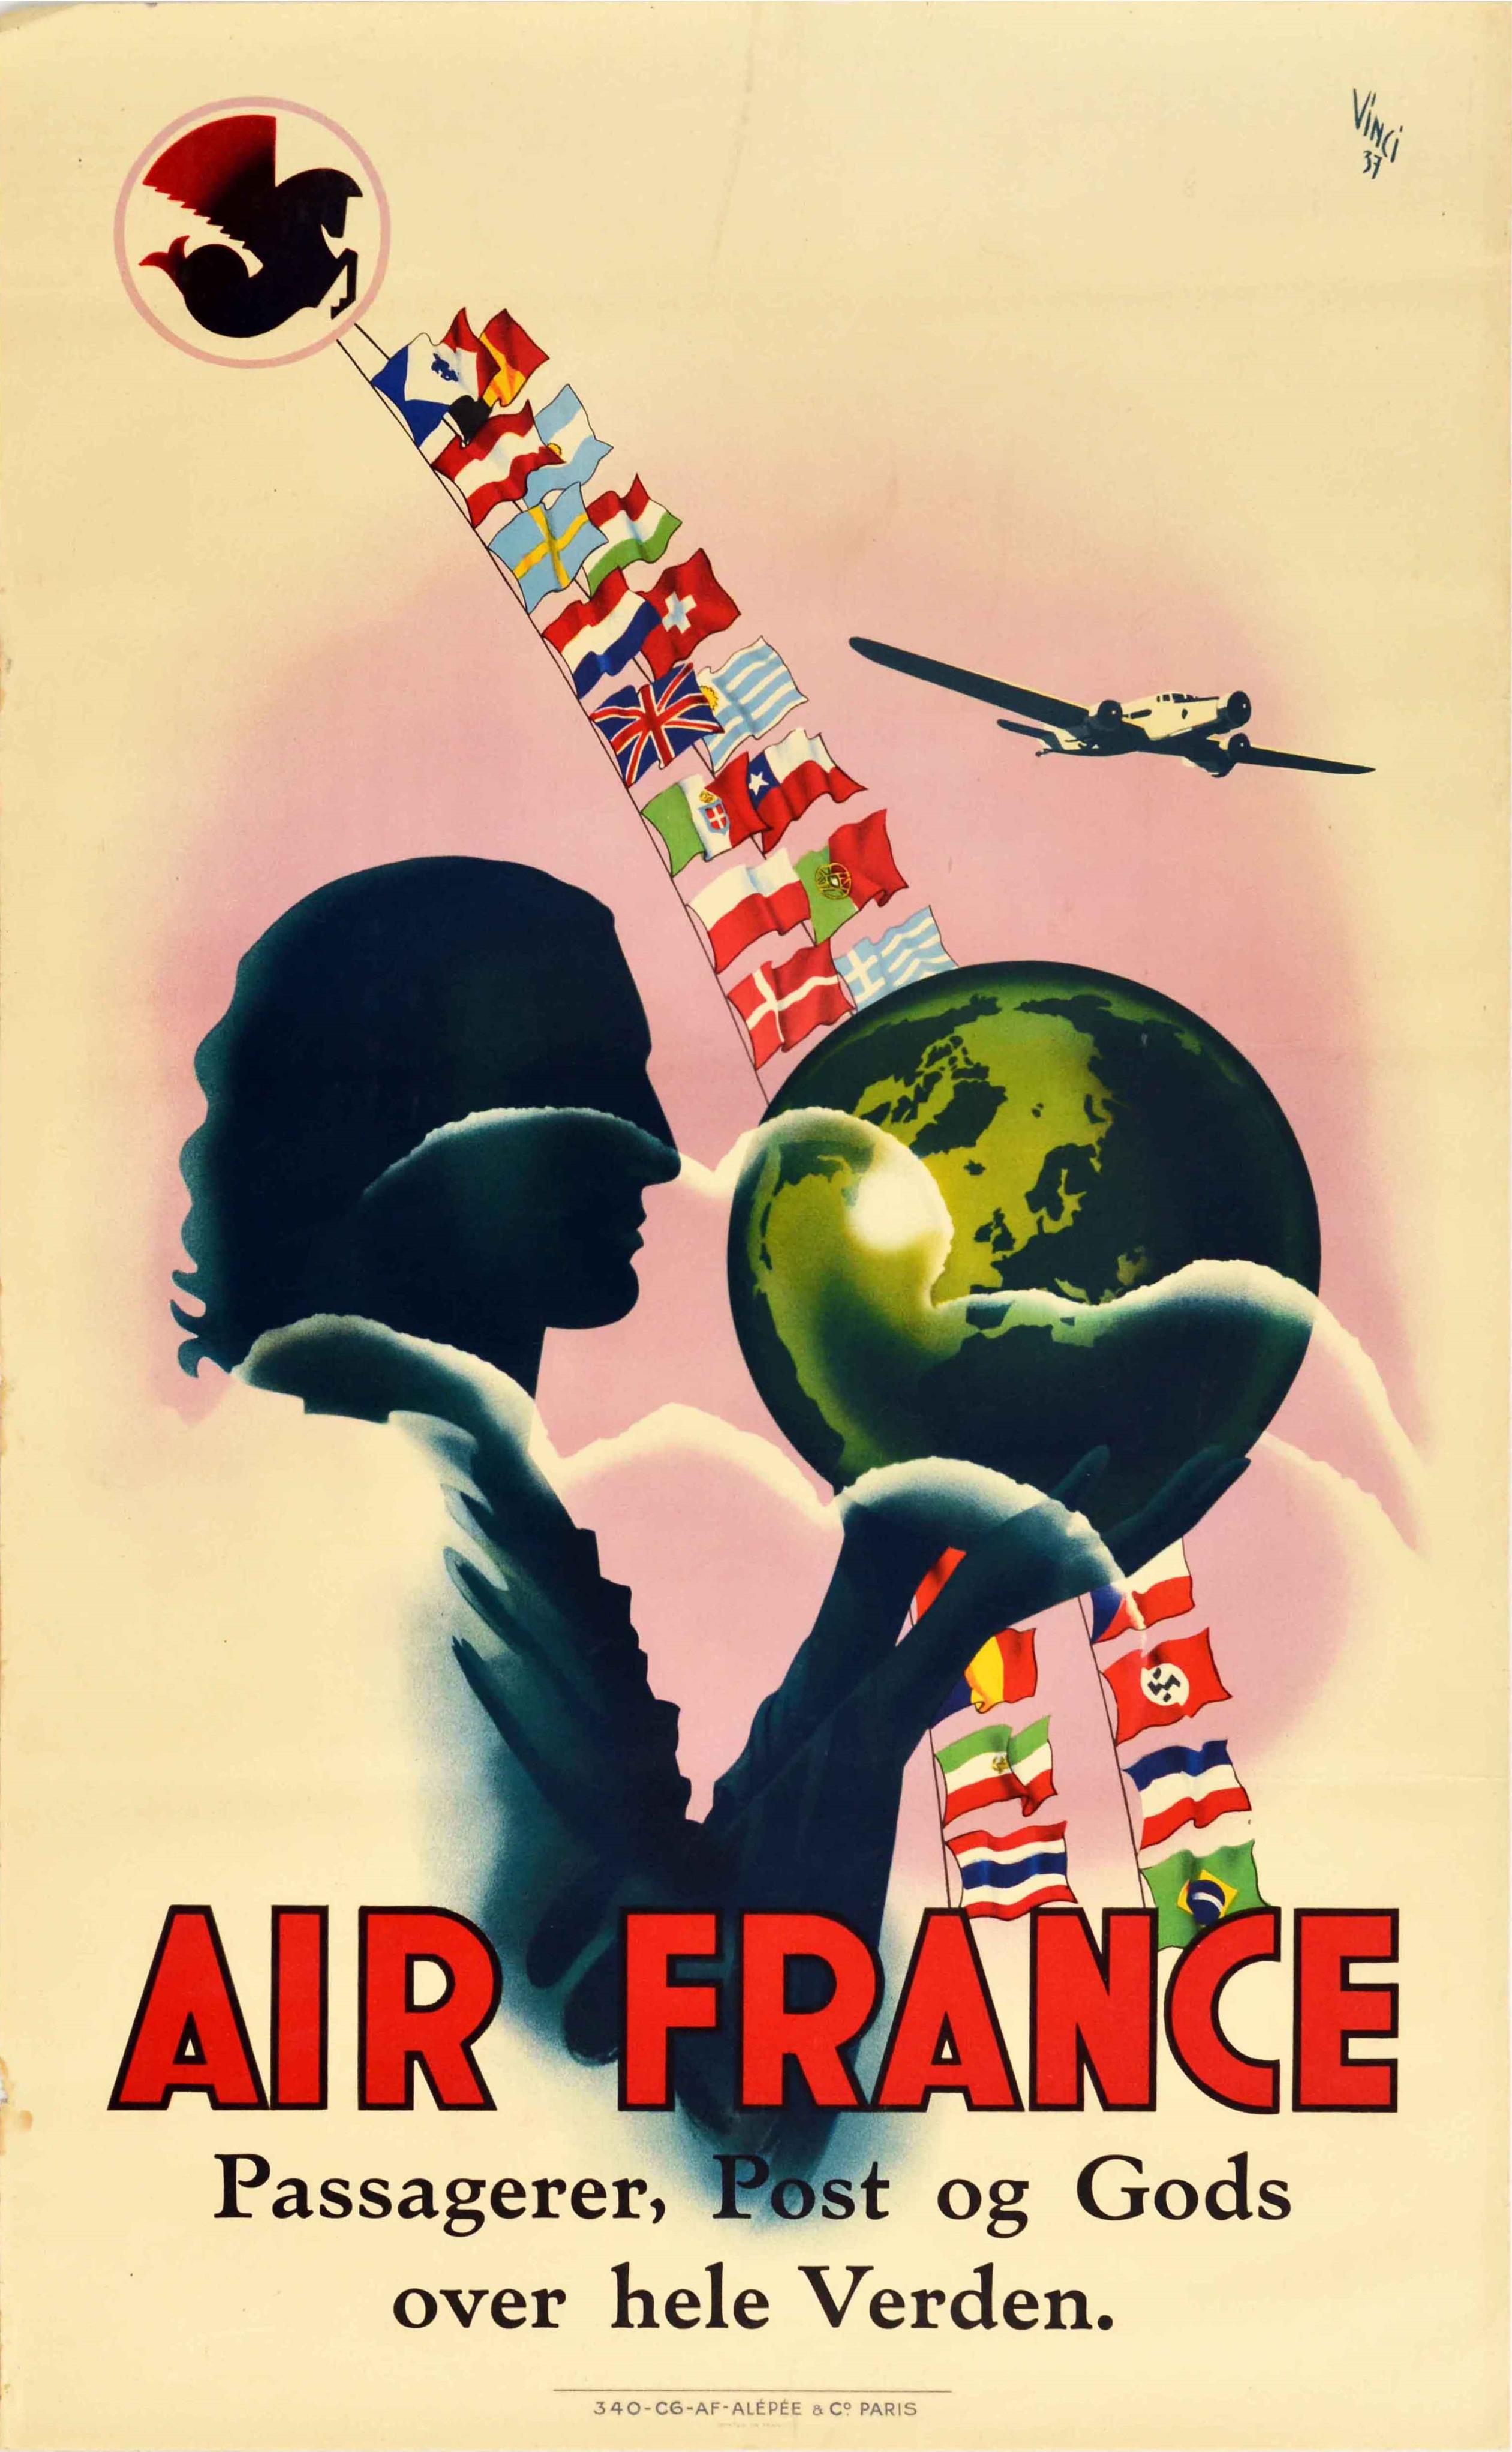 Vinci Print - Original Vintage Poster Air France Passengers Mail Freight Worldwide Flags Globe